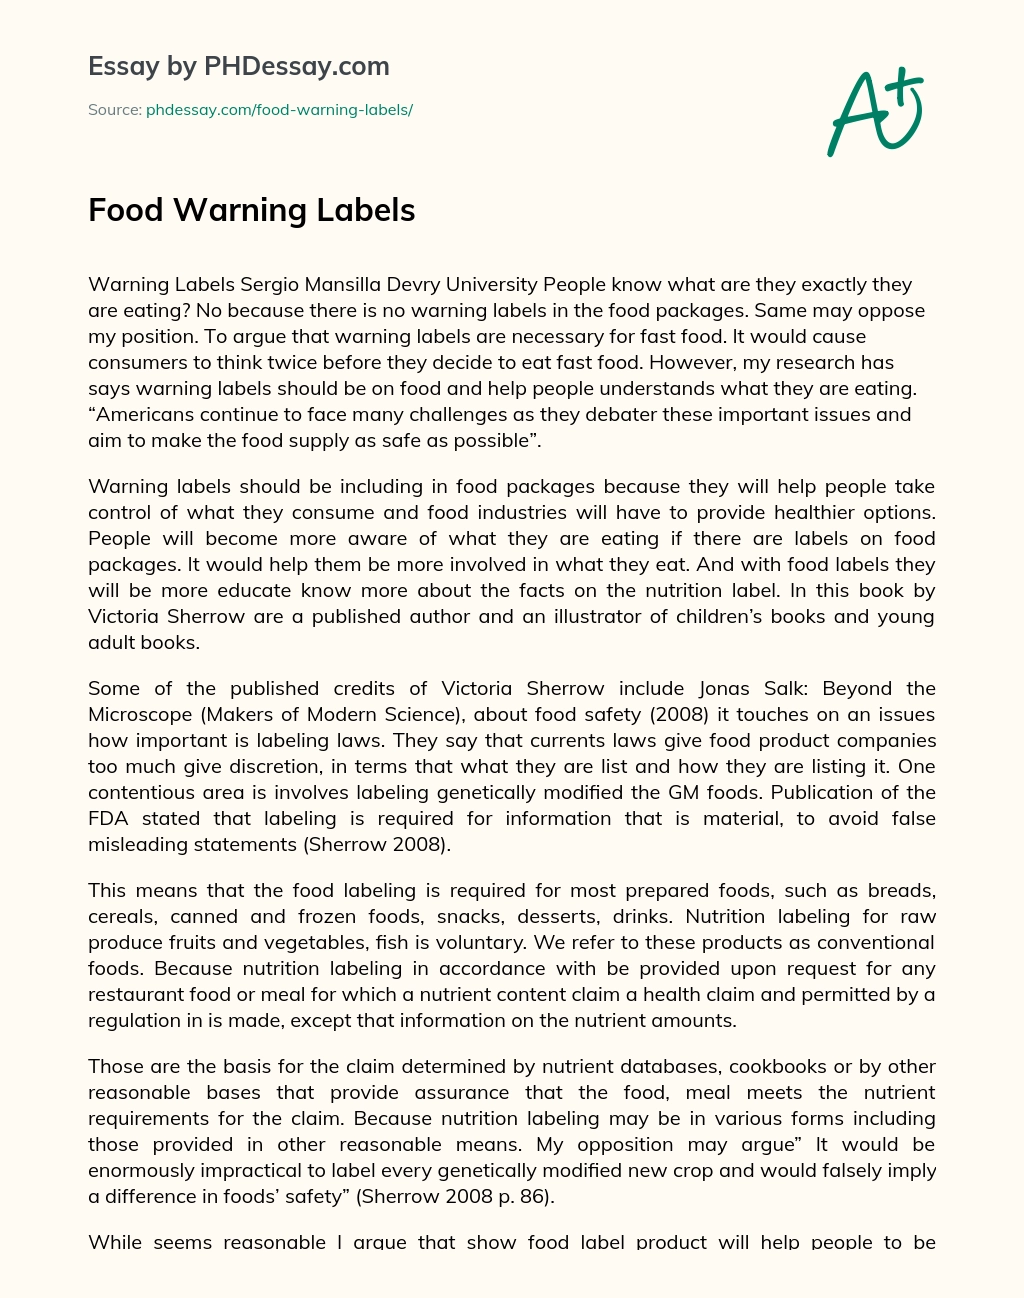 Food Warning Labels essay